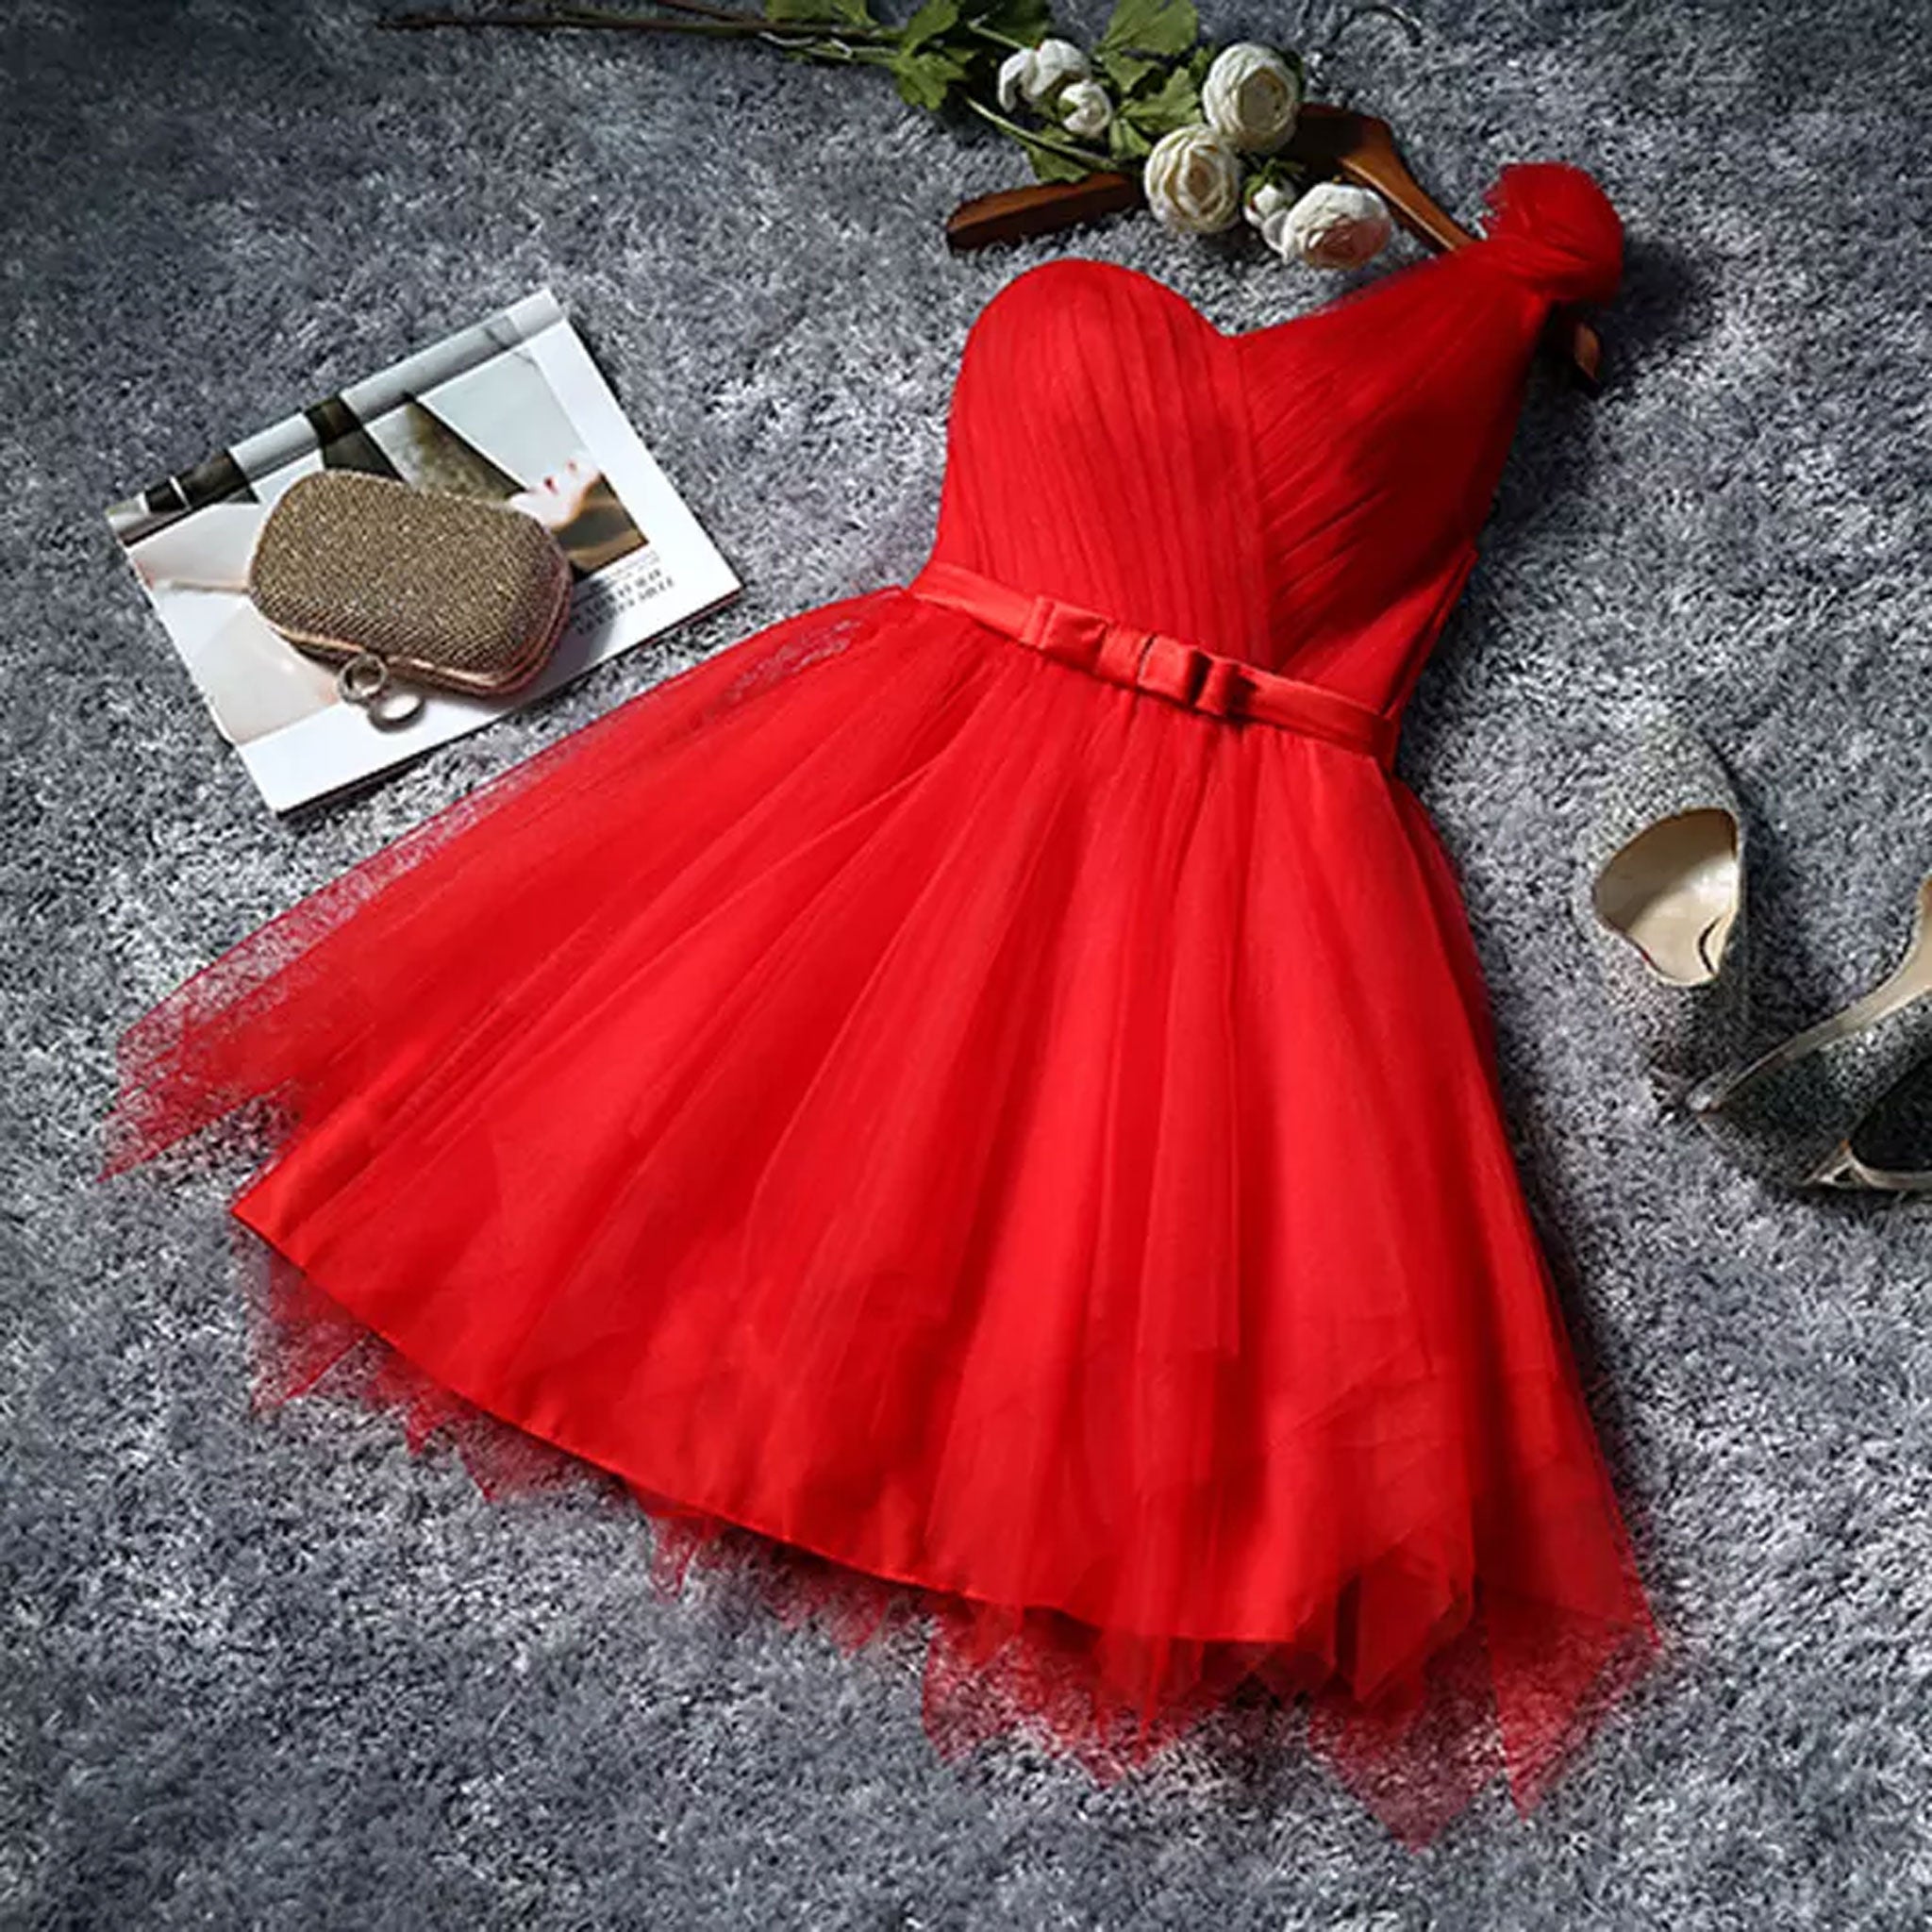 Red Women's Ball Gown Dress, Strapless, Sweetheart Neckline, Ruffled Skirt,  Girls Birthday Quinceanera Dress, Red Wedding Dress - Etsy